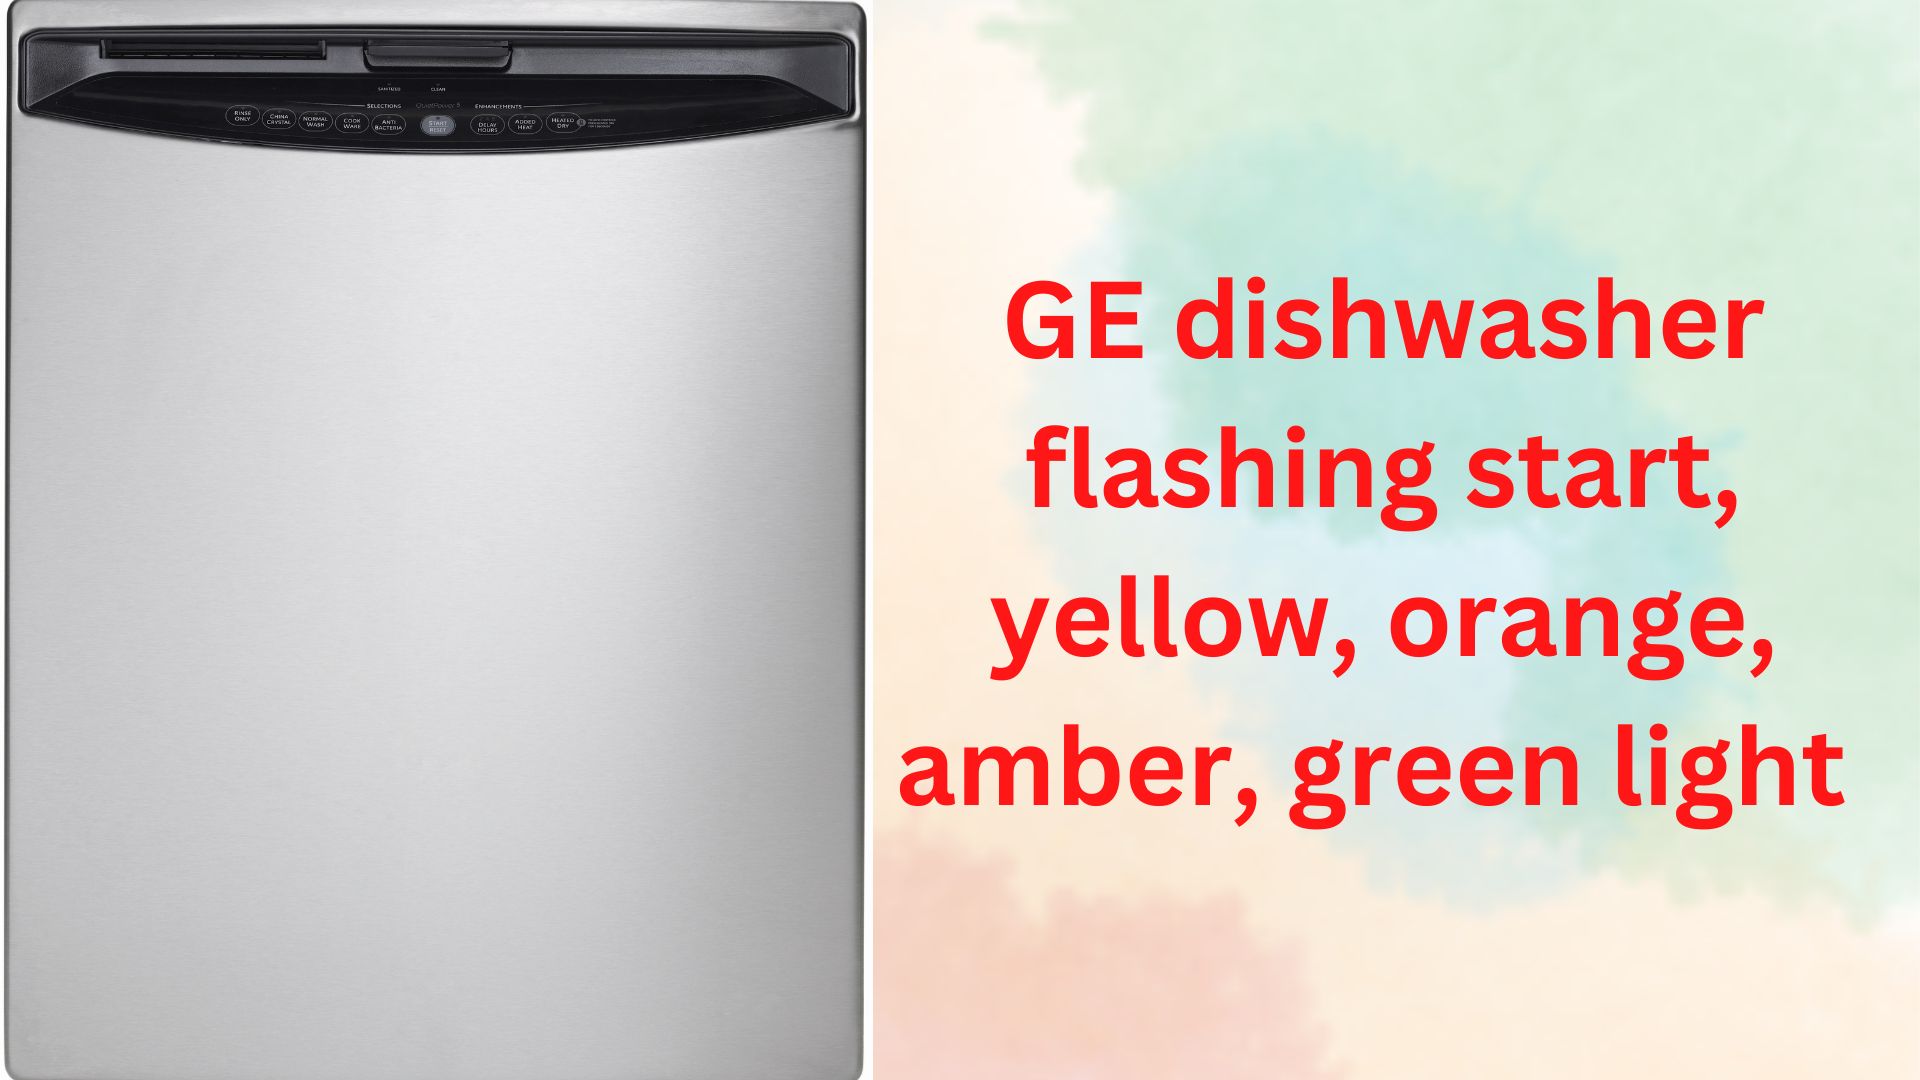 ge dishwasher flashing start, yello, orange, amber and green light